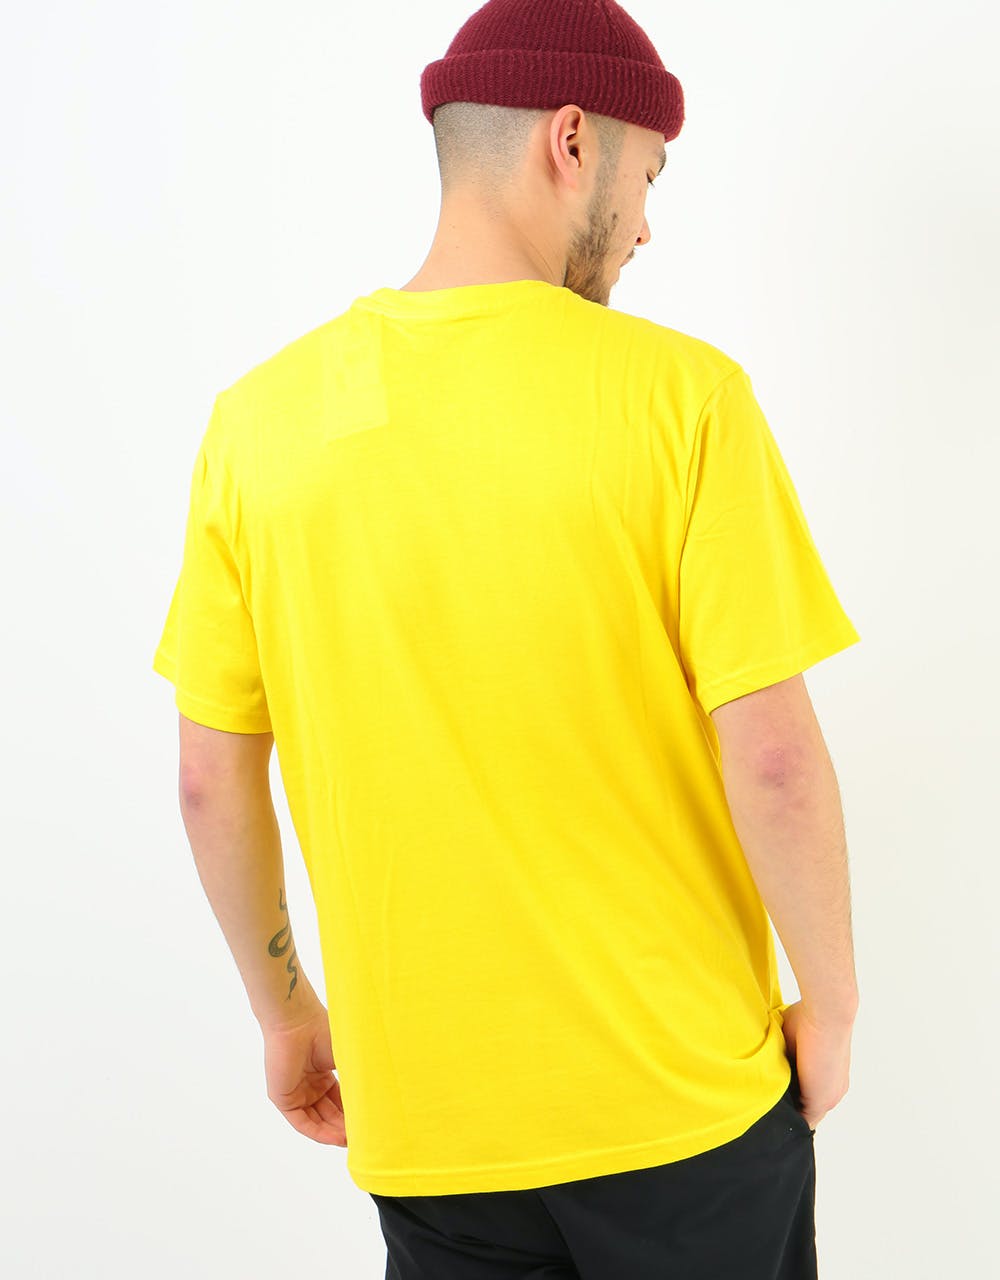 Element Vertical T-Shirt - Bright Yellow